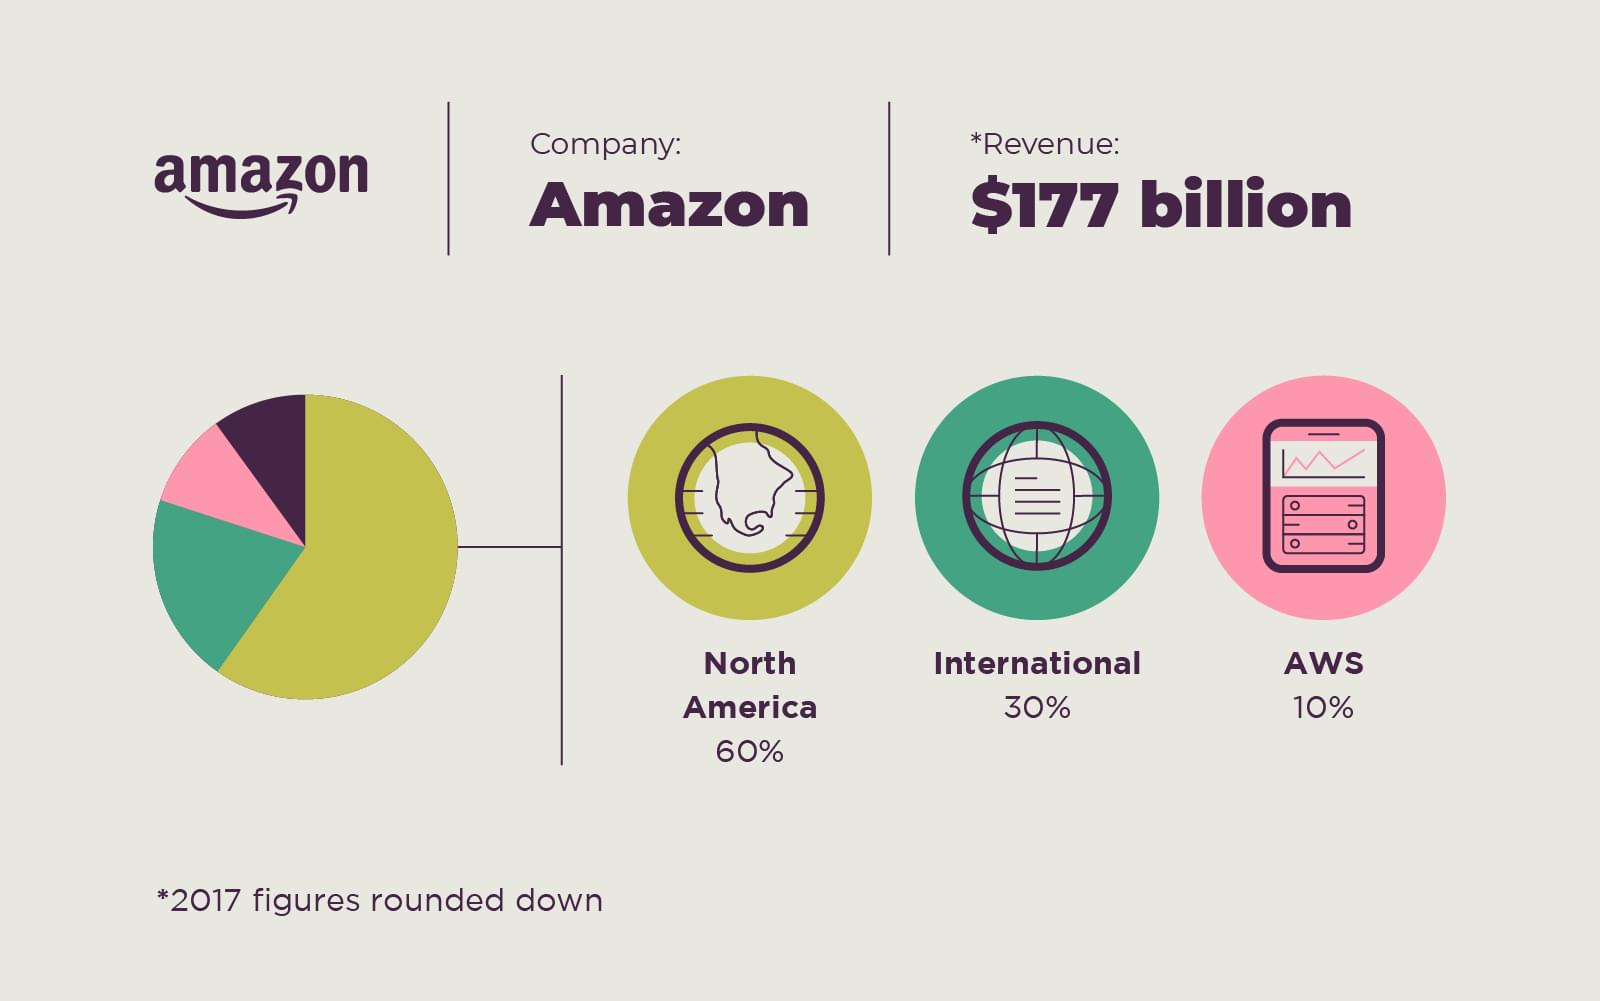 Amazon revenue breakdown by market and Amazon Web Services